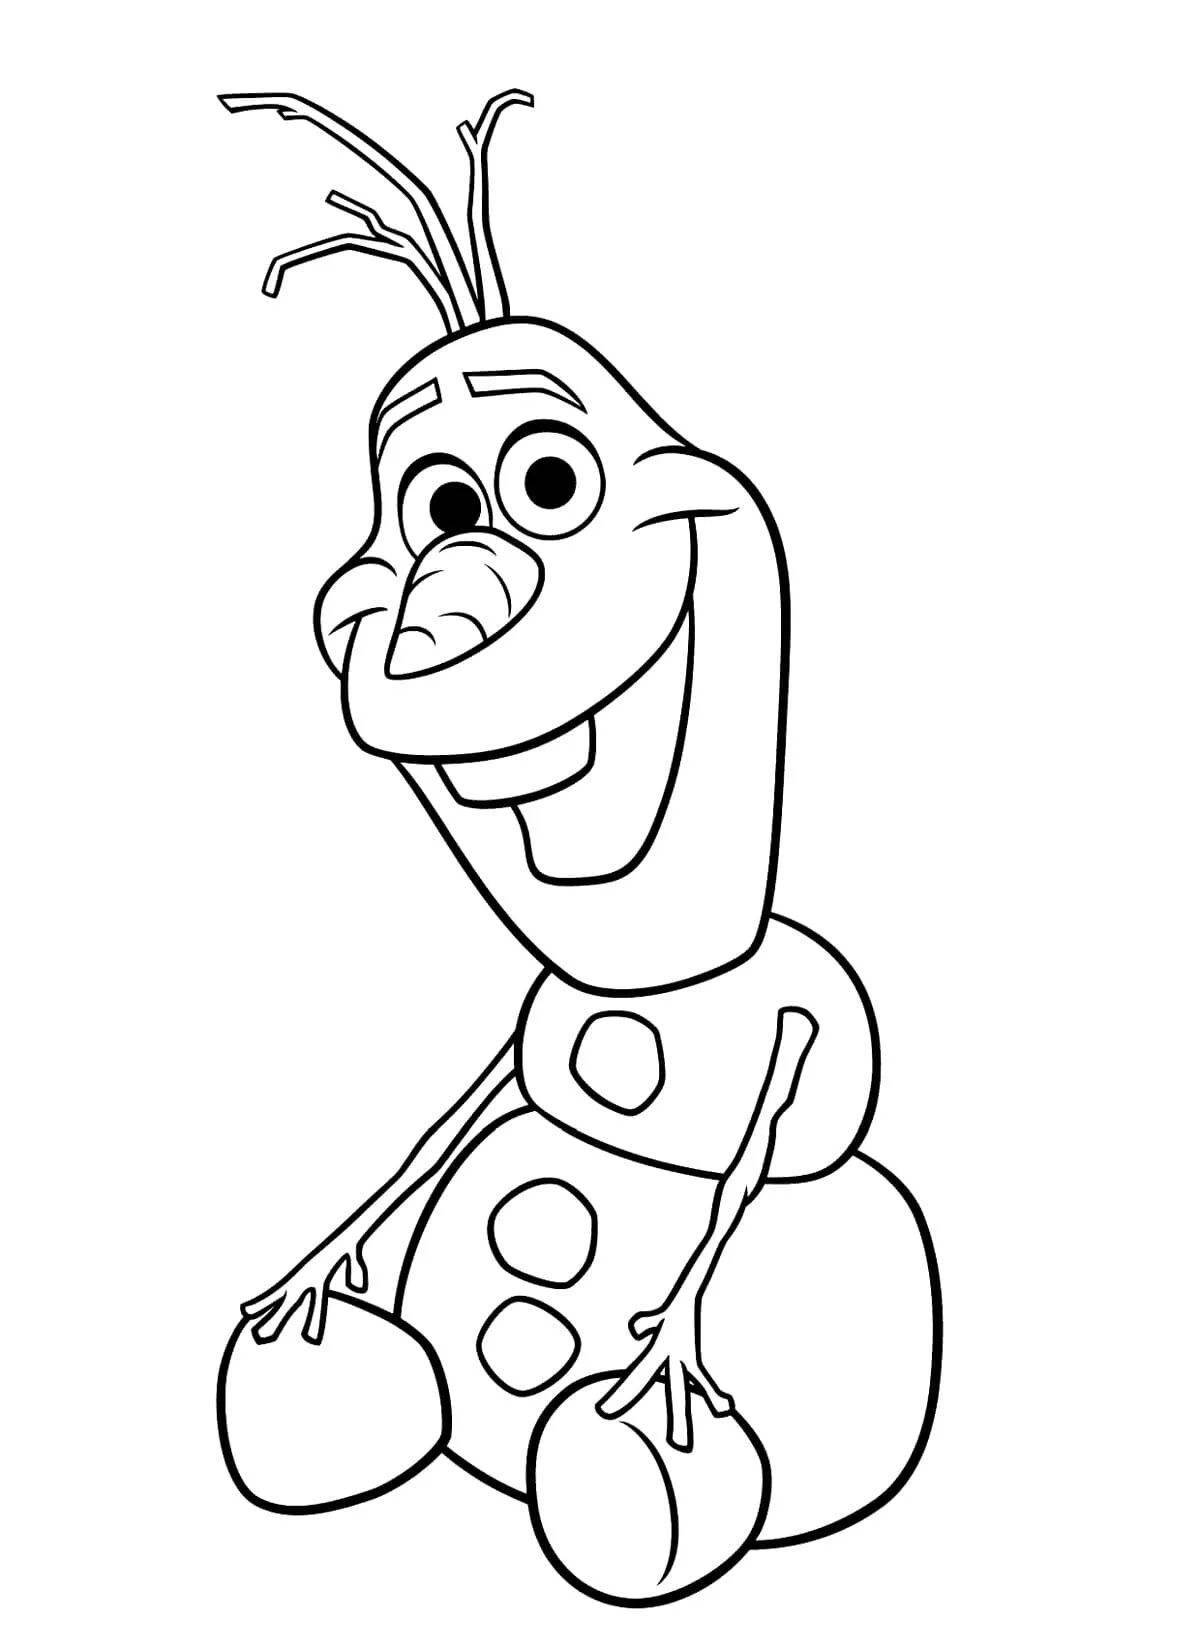 Olaf the Joyful Snowman coloring book